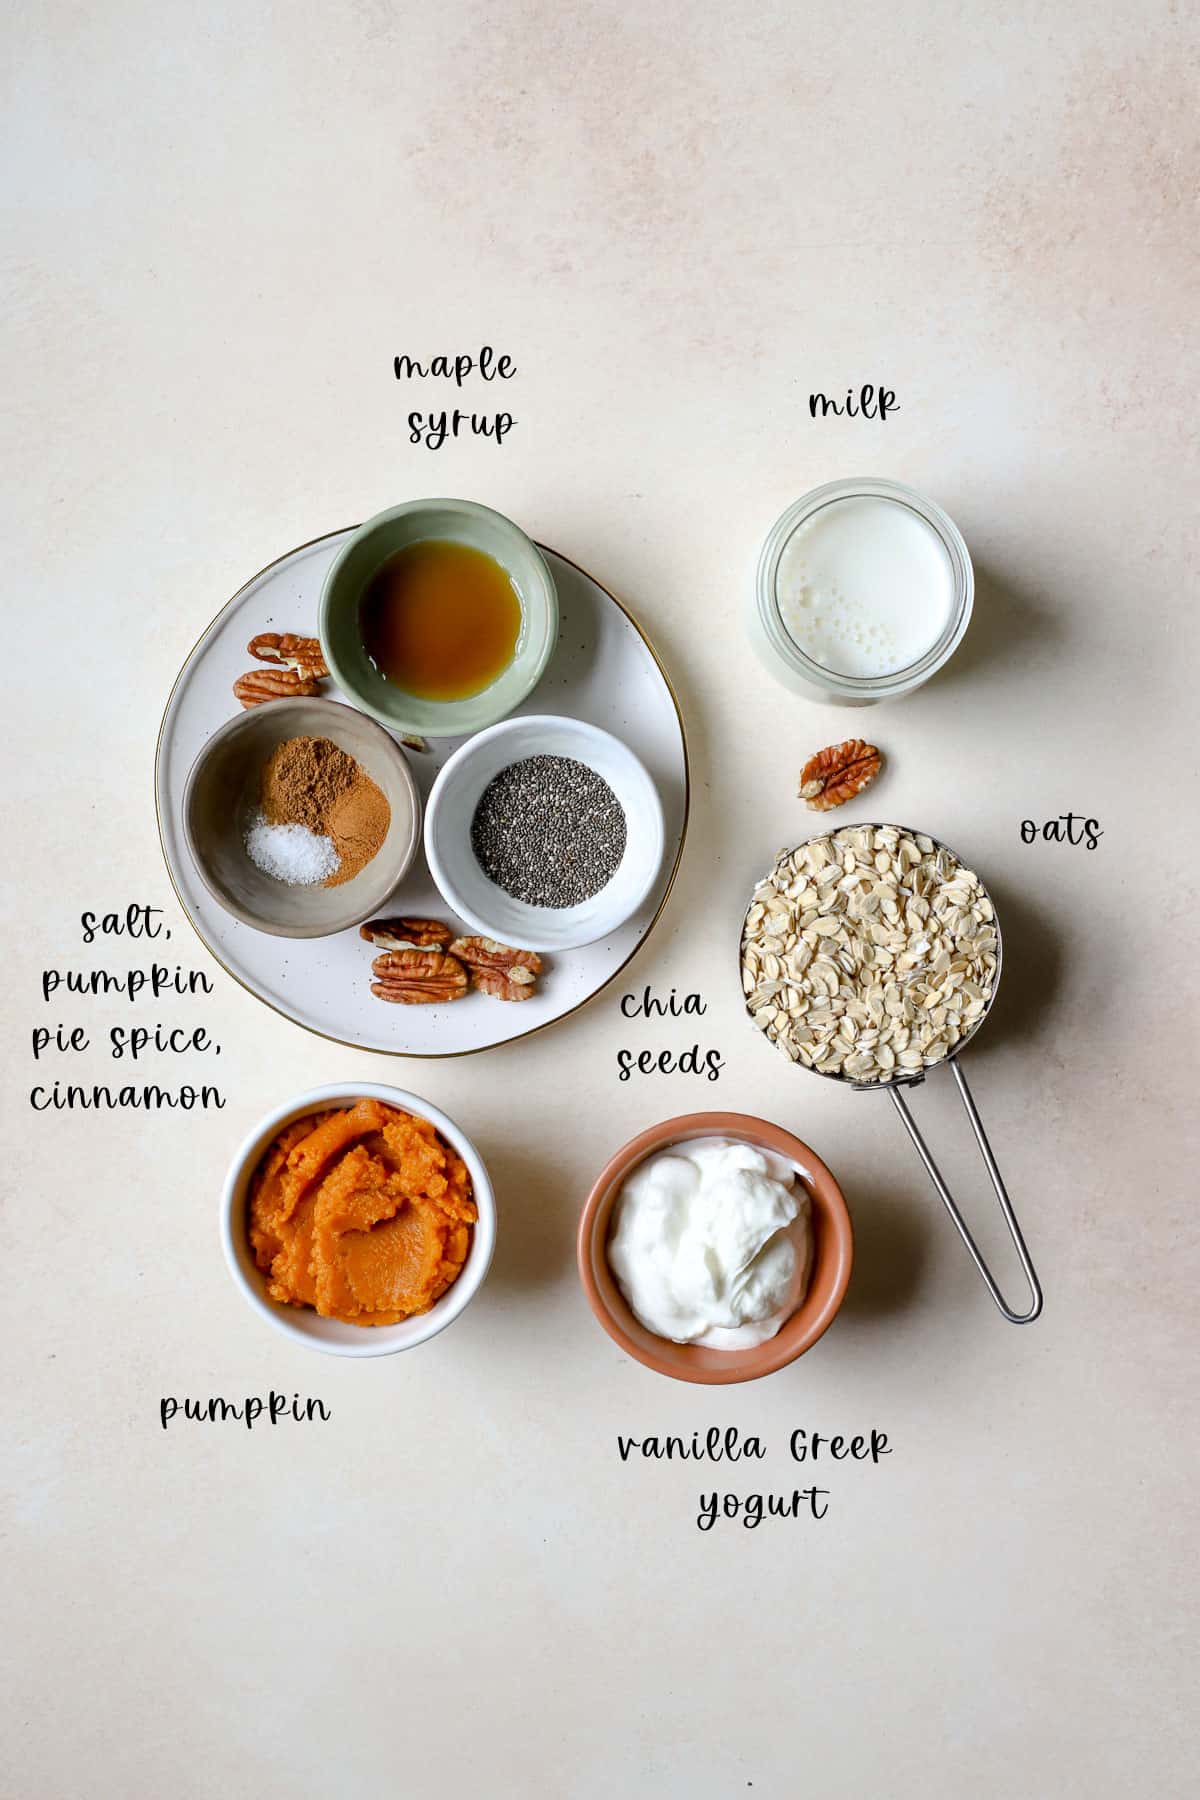 Ingredients including oats, chia seeds, salt, pumpkin pie spice, cinnamon, milk, vanilla Greek yogurt, pumpkin, maple syrup, and pecans